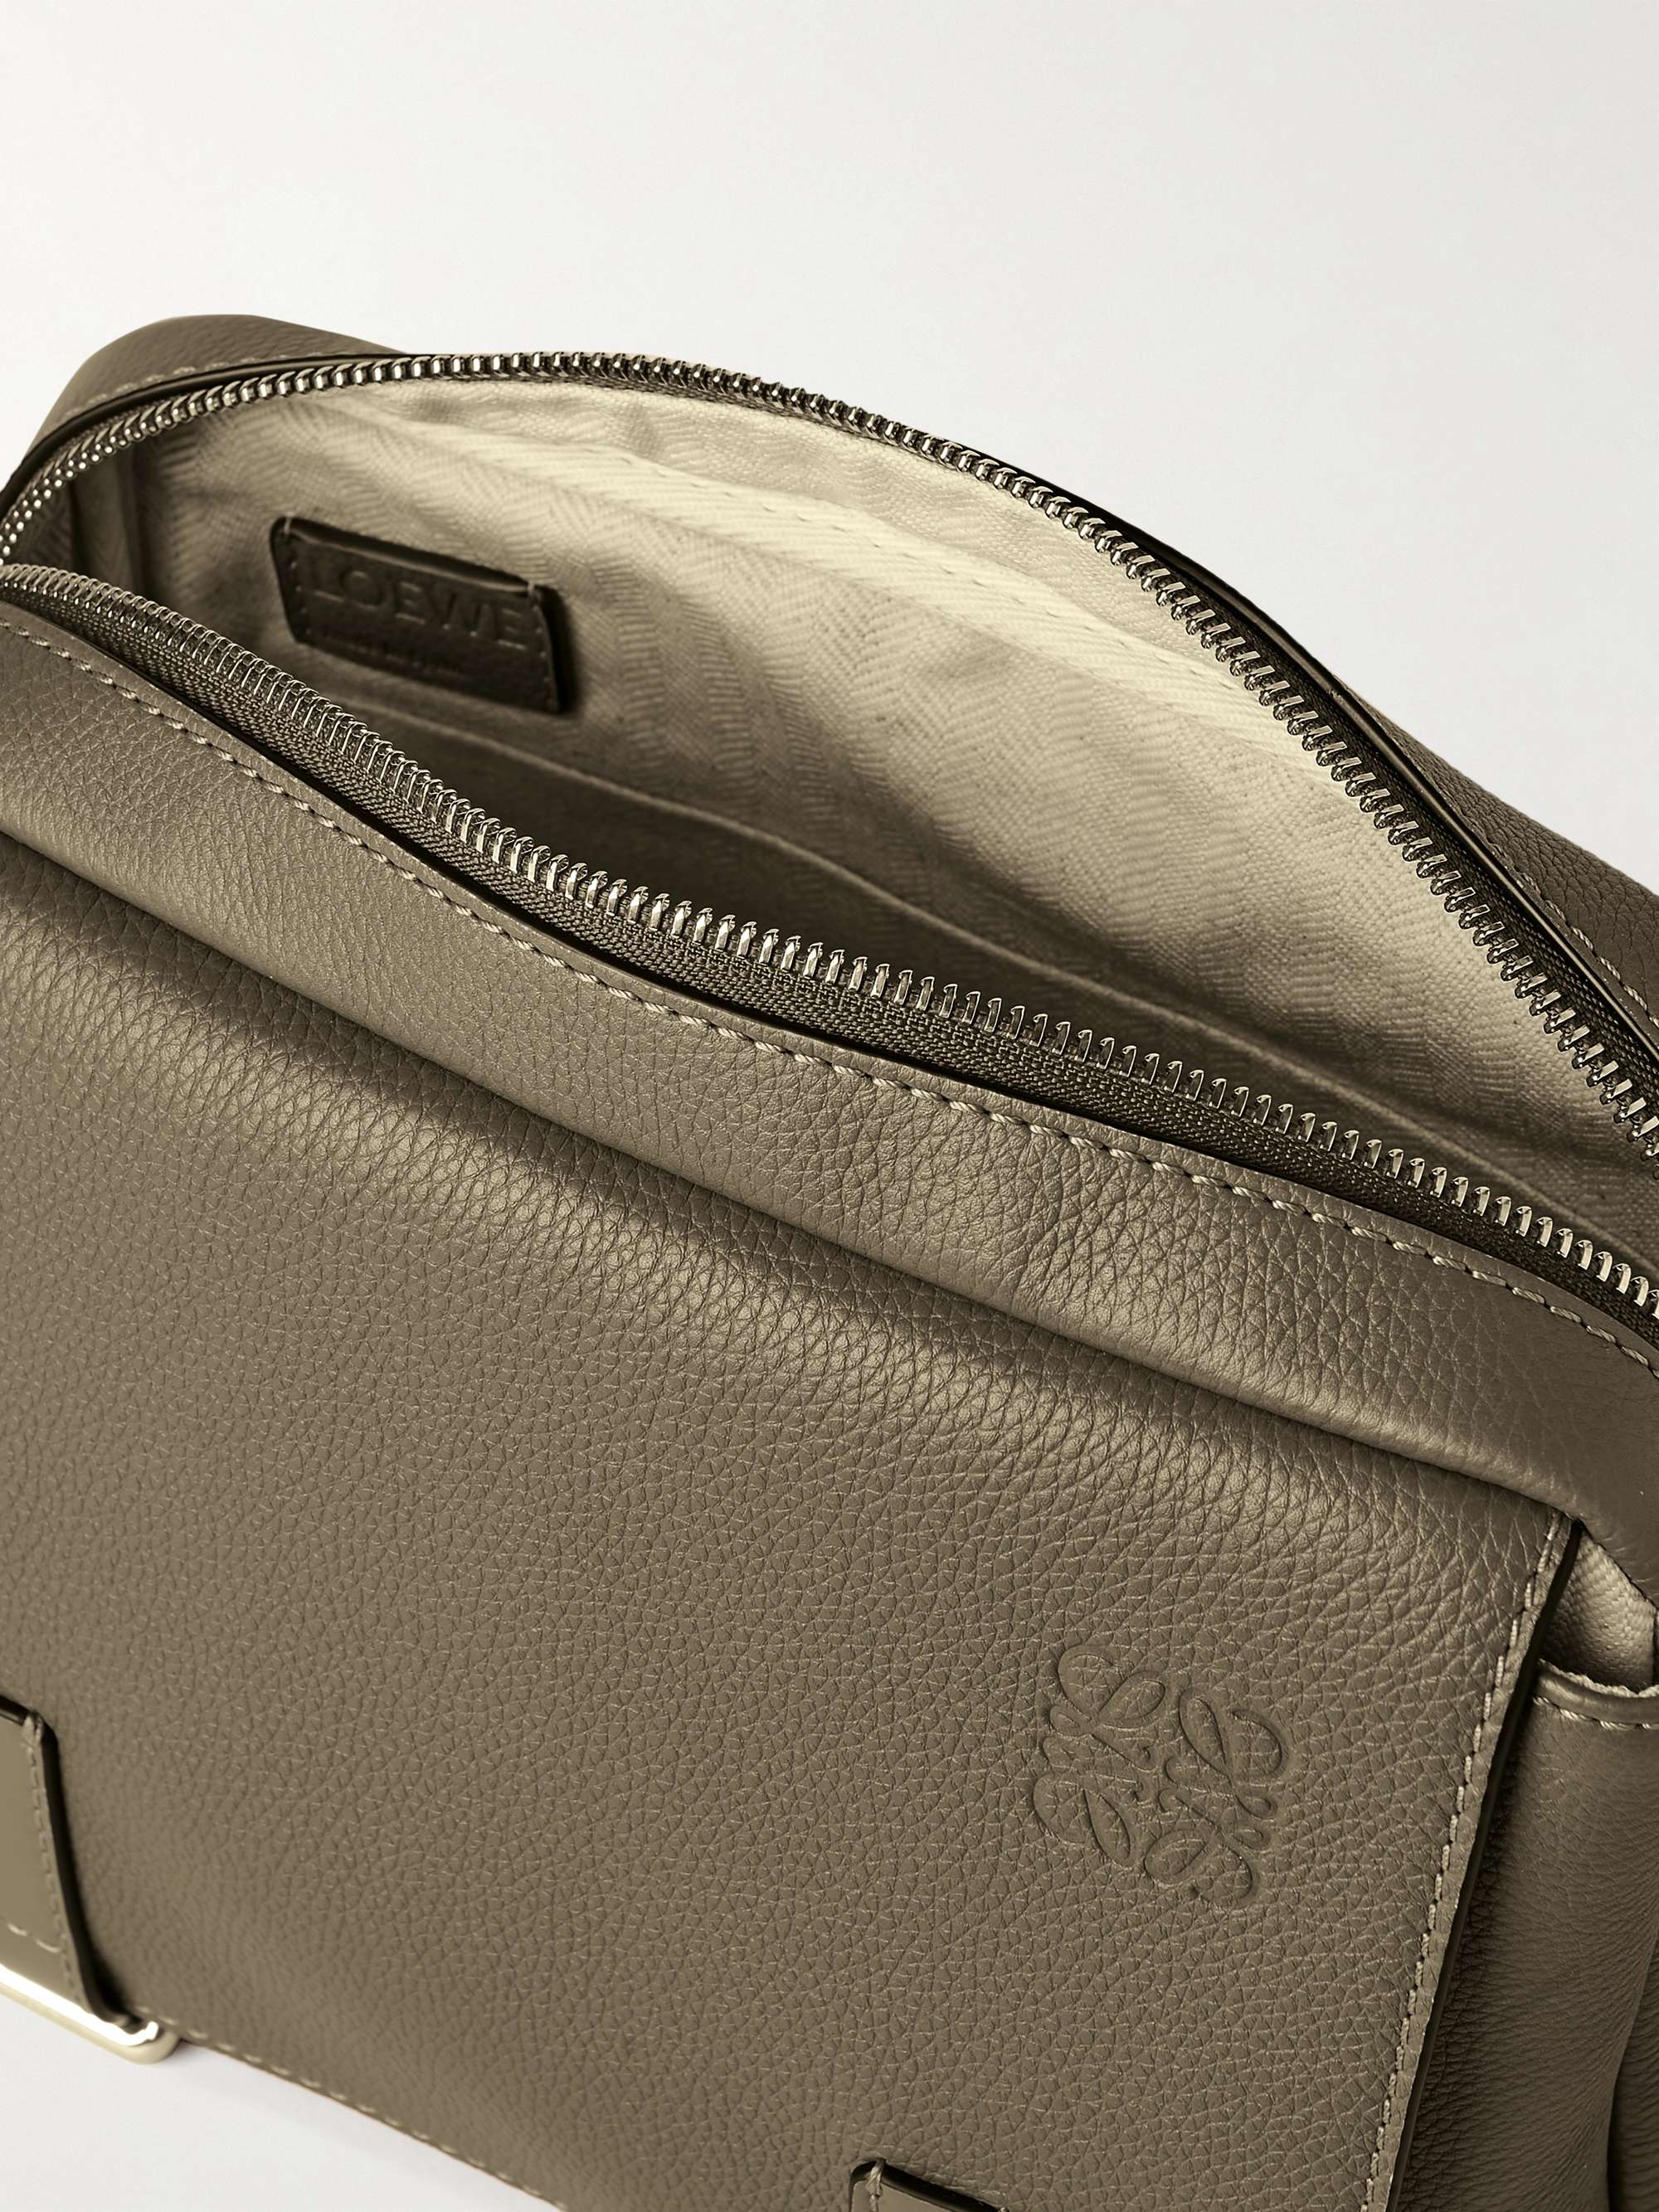 LOEWE Military XS Full-Grain Leather Messenger Bag